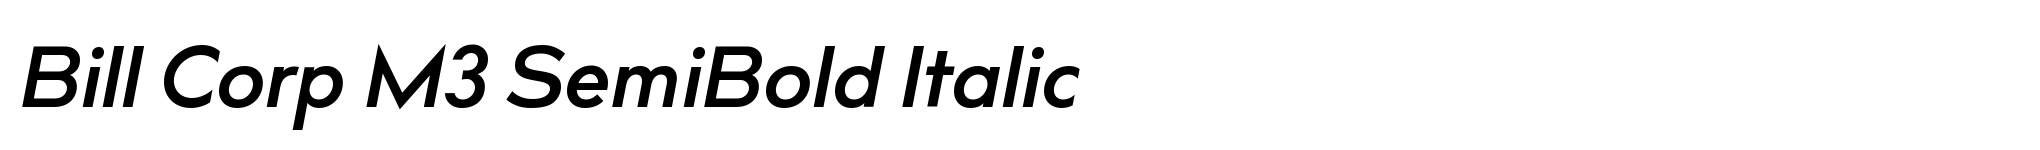 Bill Corp M3 SemiBold Italic image